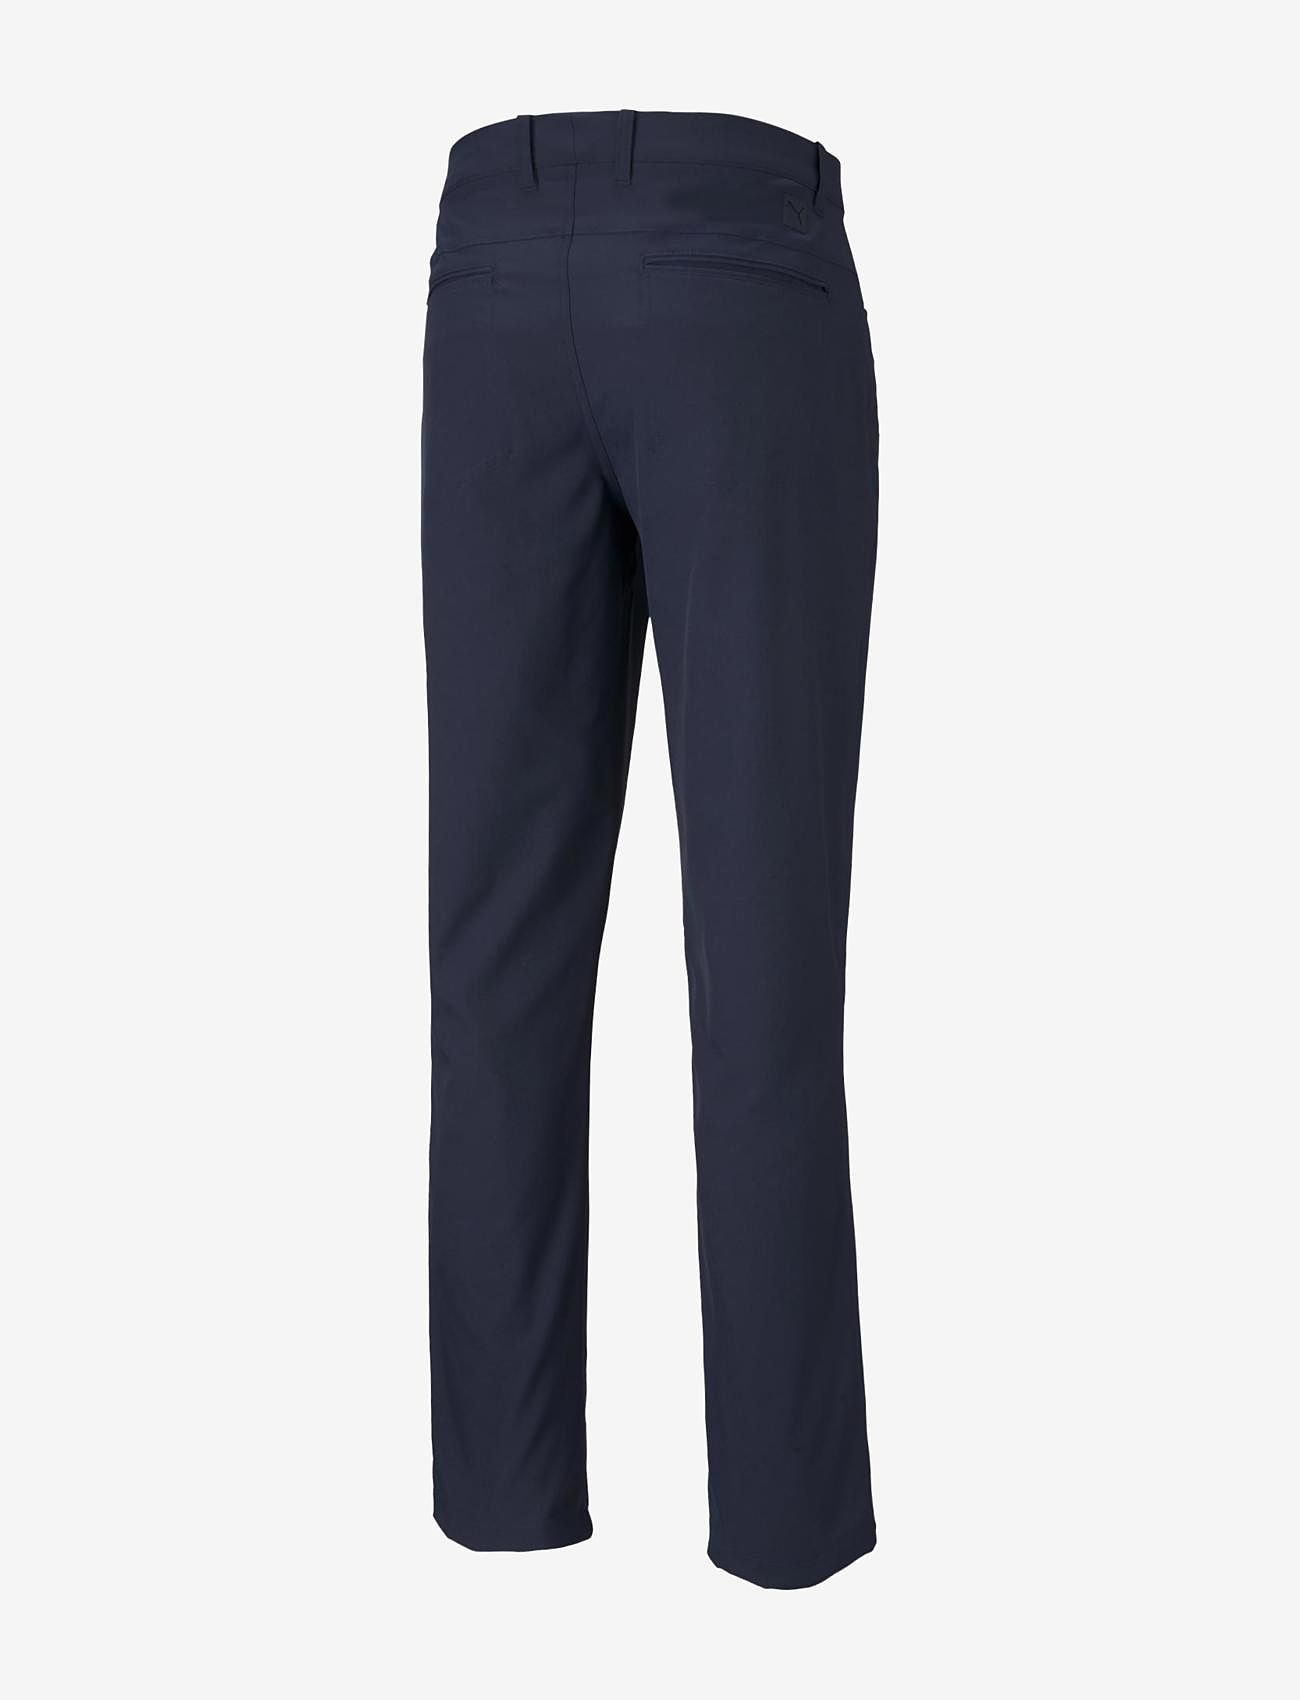 PUMA Golf - Jackpot 5 Pocket Pant - golf pants - navy blazer - 1